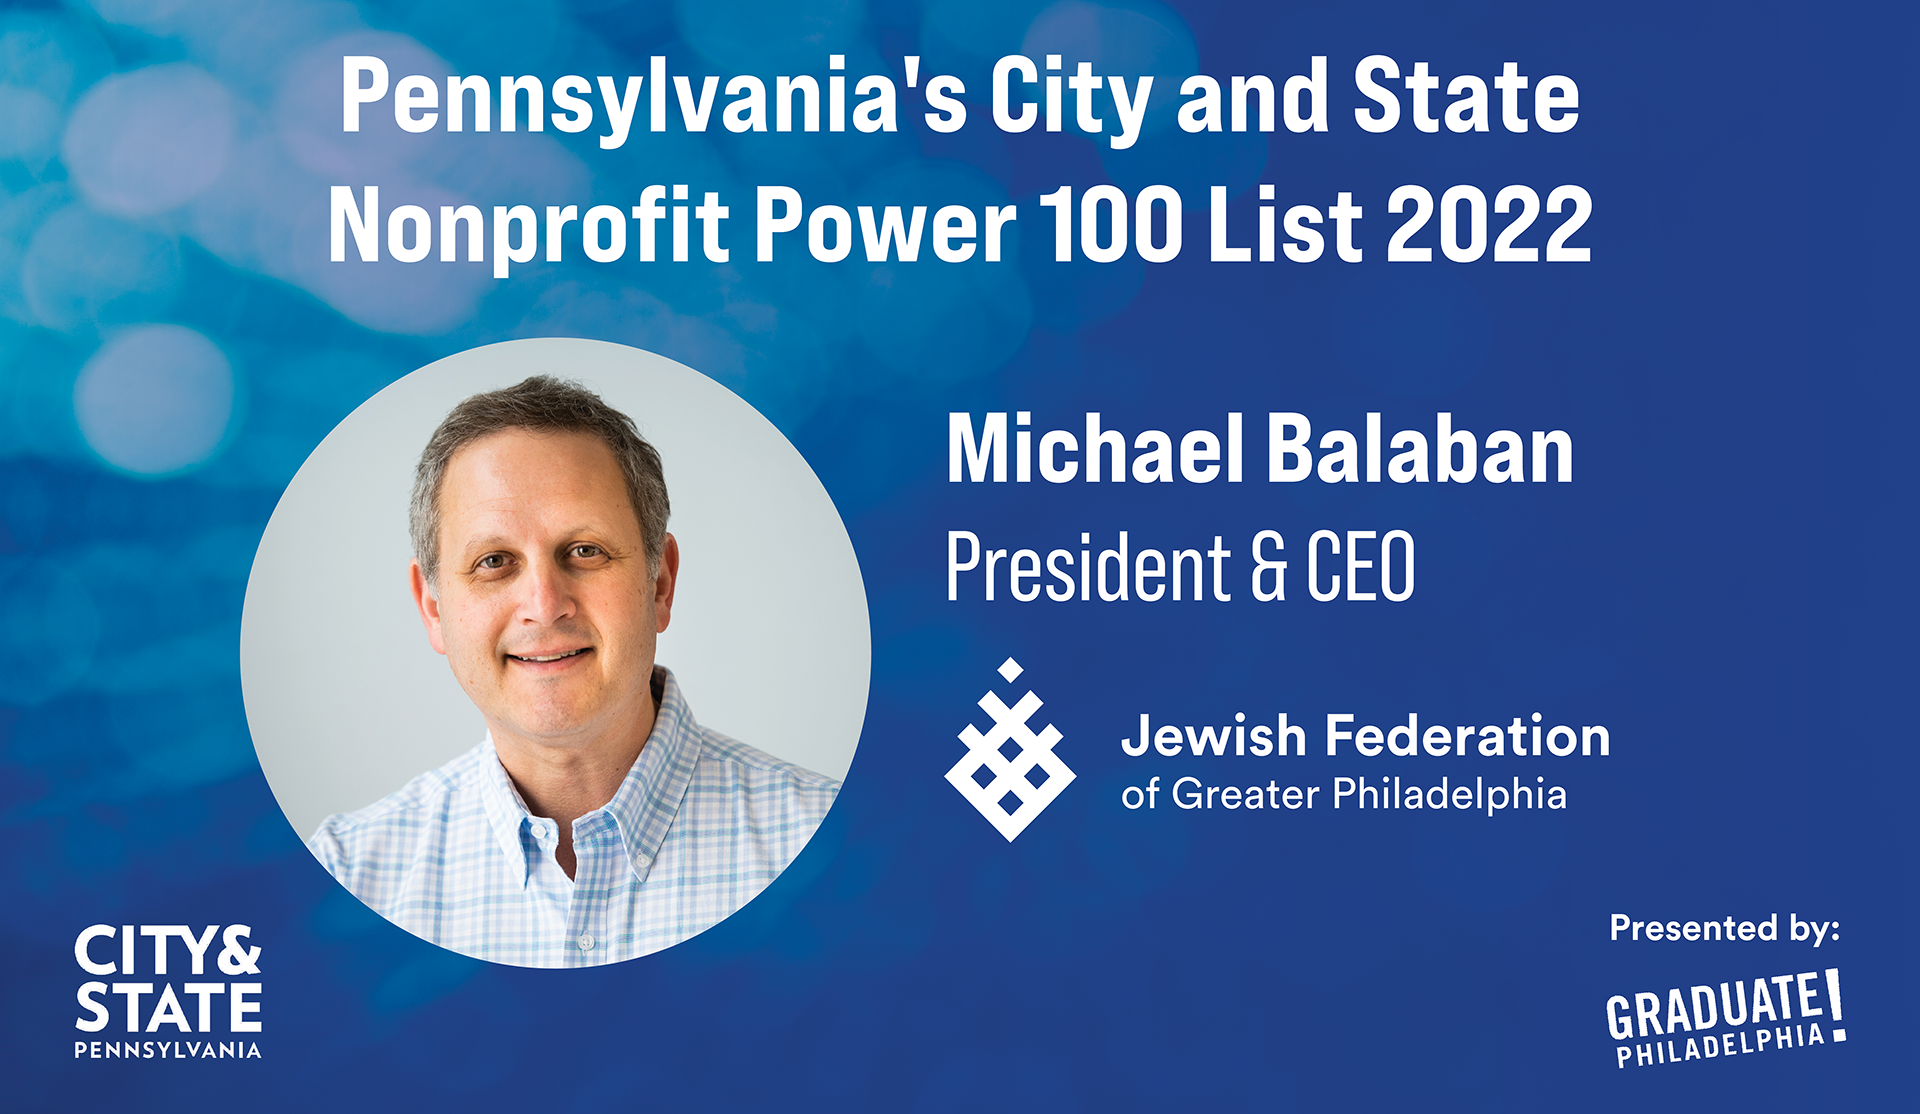 Jewish Federation Makes the City & State PA Nonprofit Power 100 List